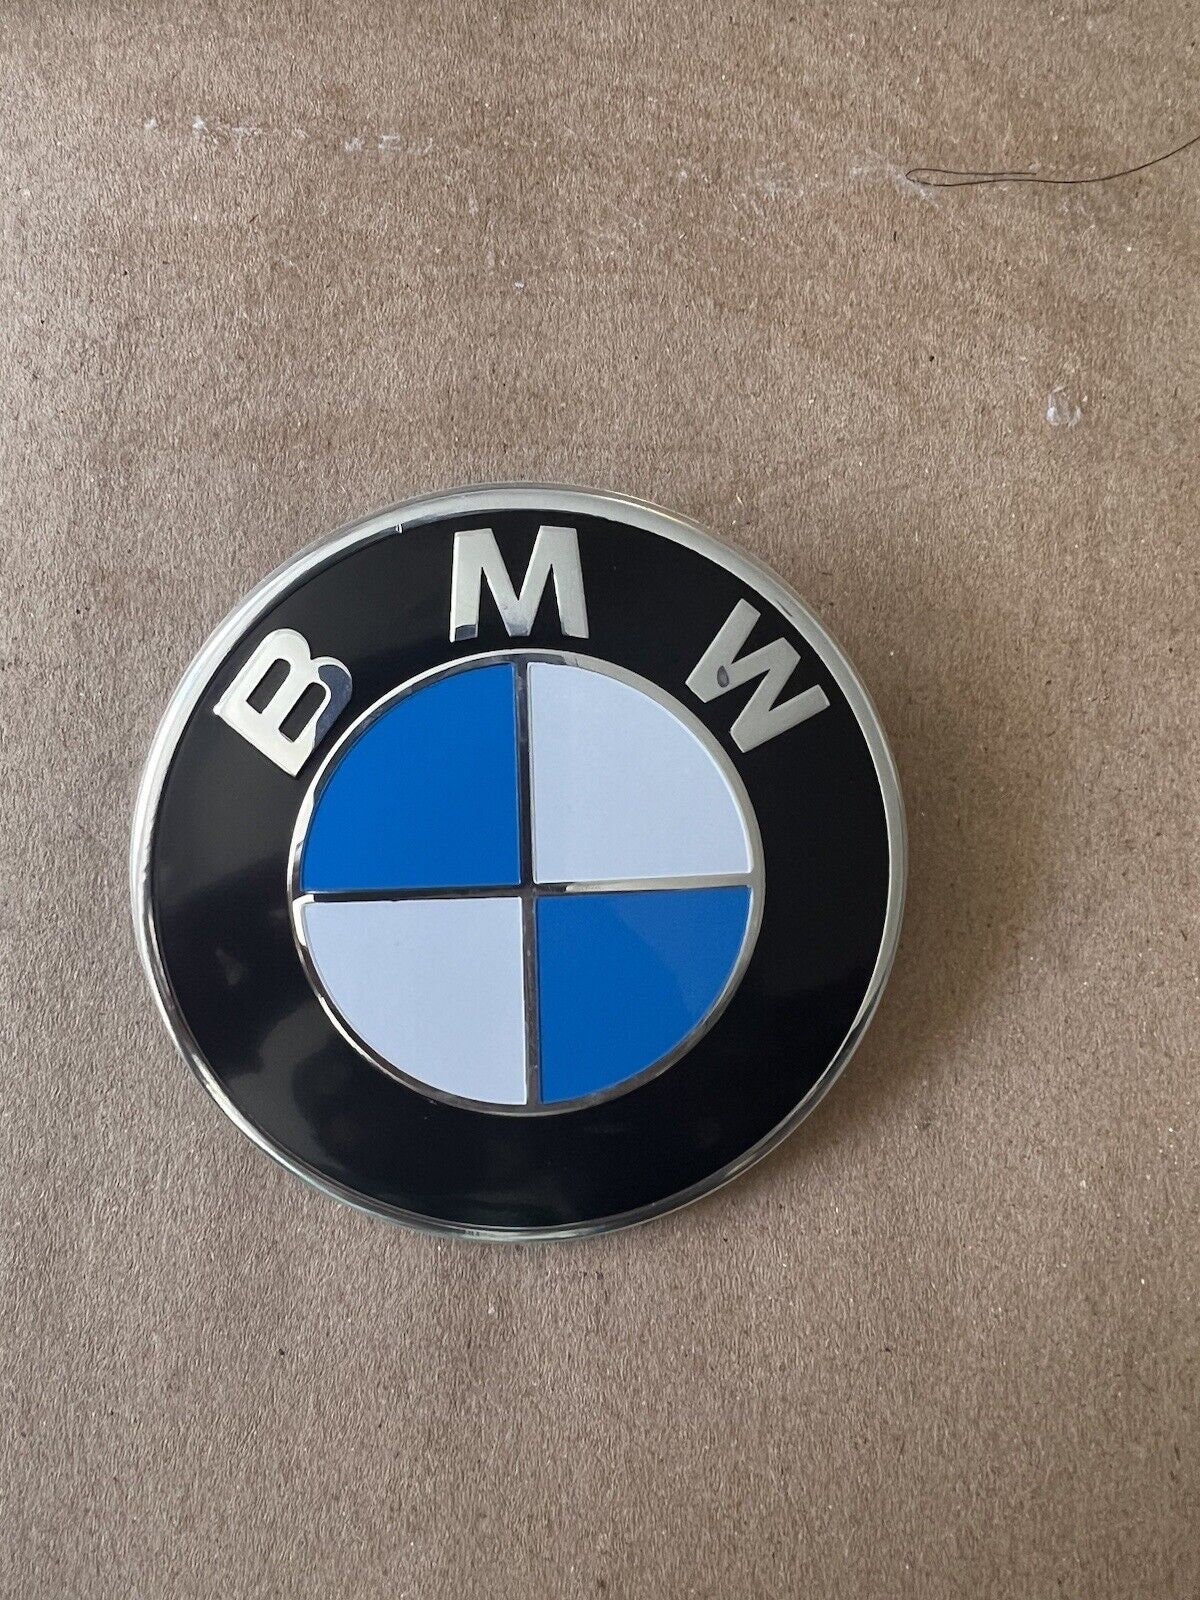 Kompatibel mit BMW Emblem 82mm / 74mm Haube Vorne Hinten Motorhaube  Kofferraum